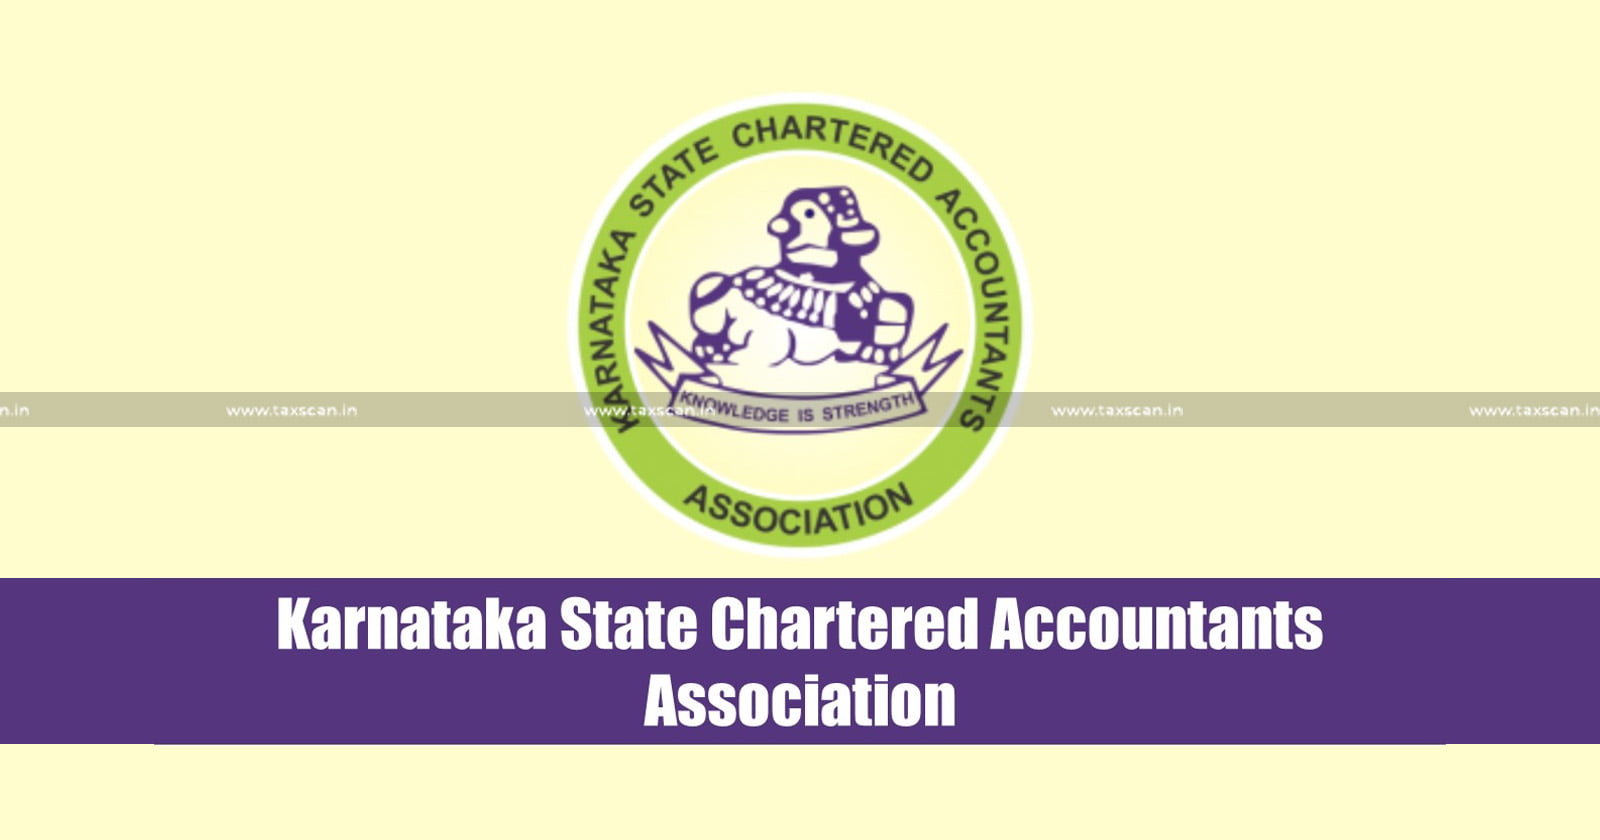 Karnataka State Chartered Accountants Association - Chartered Accountants - Association - KPTCE Act - Registration - Taxscan